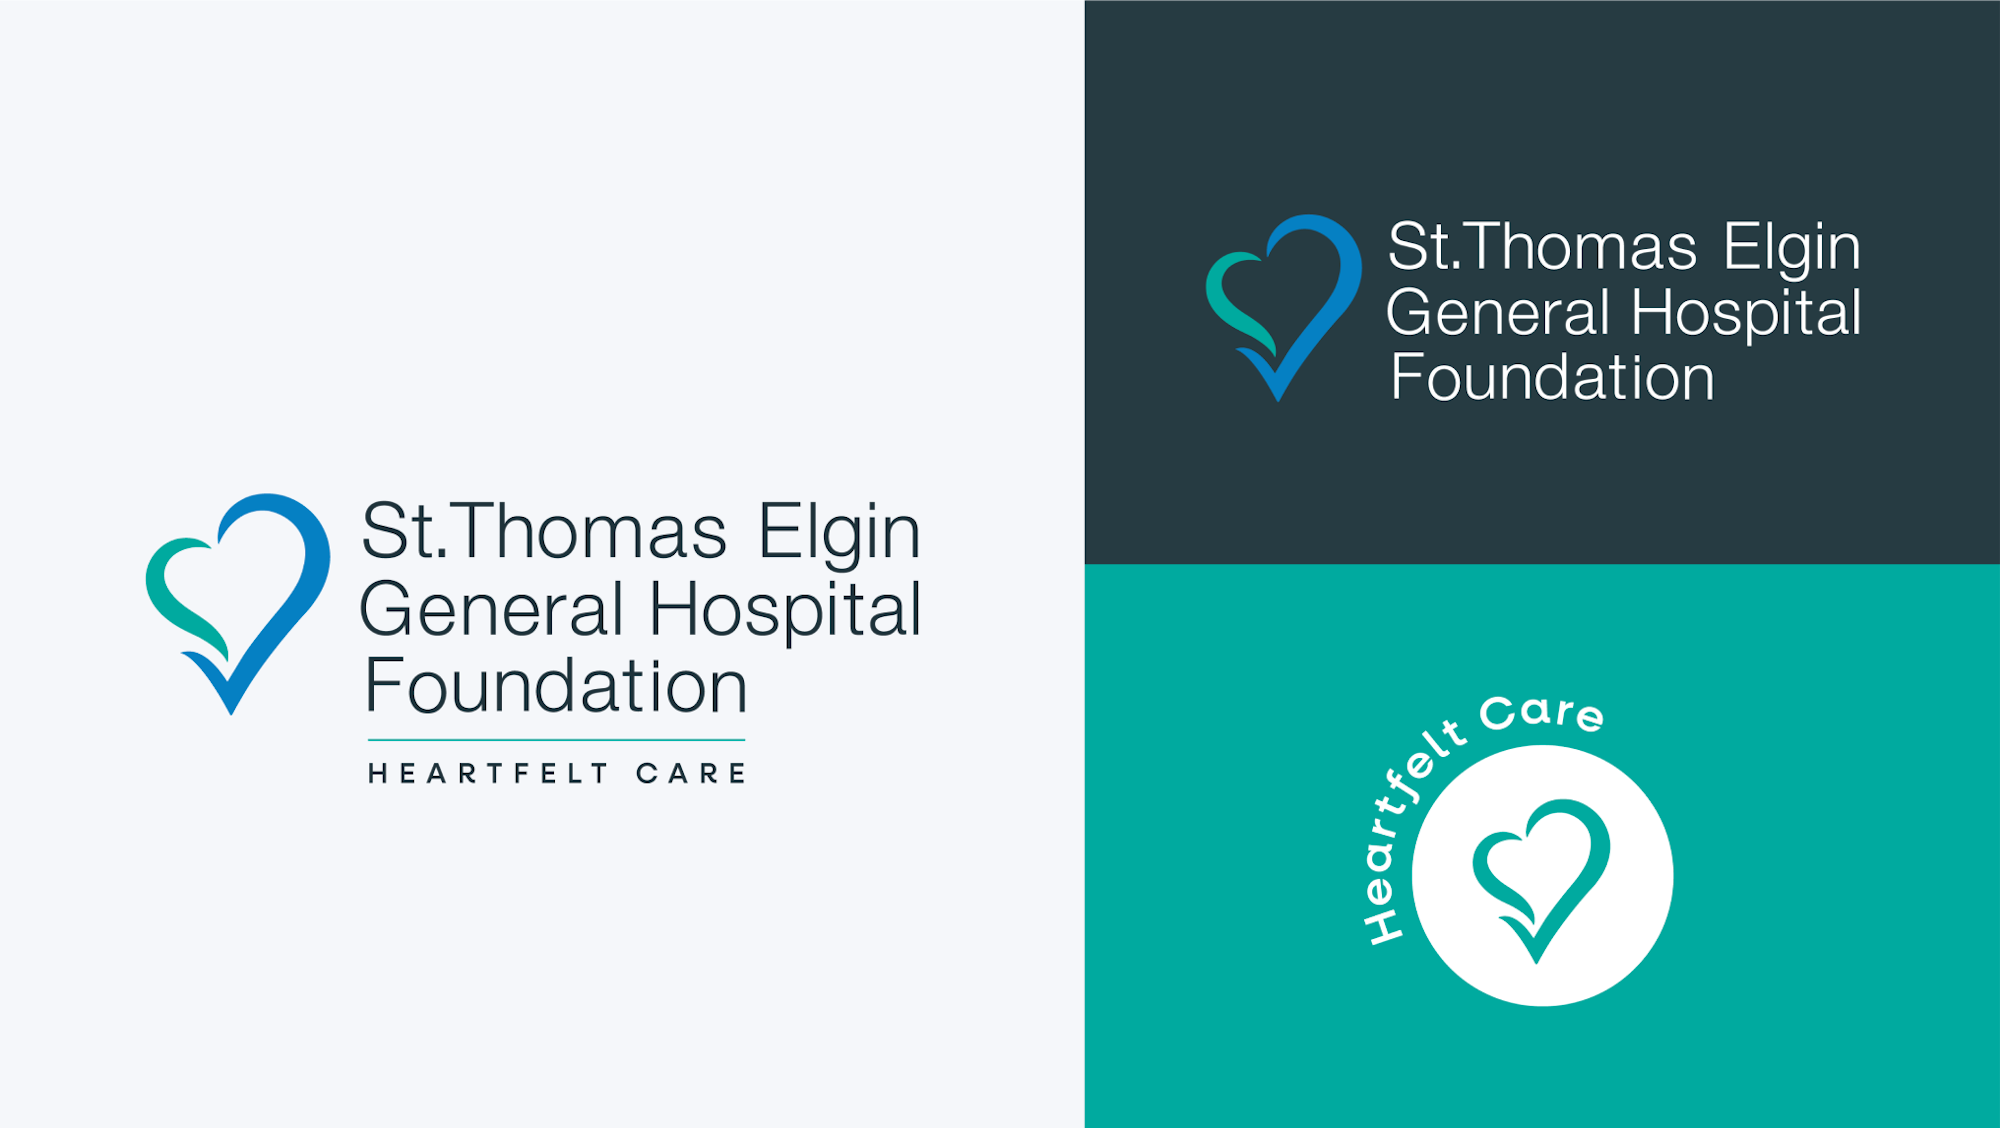 St. Thomas Elgin General Hospital Foundation logos